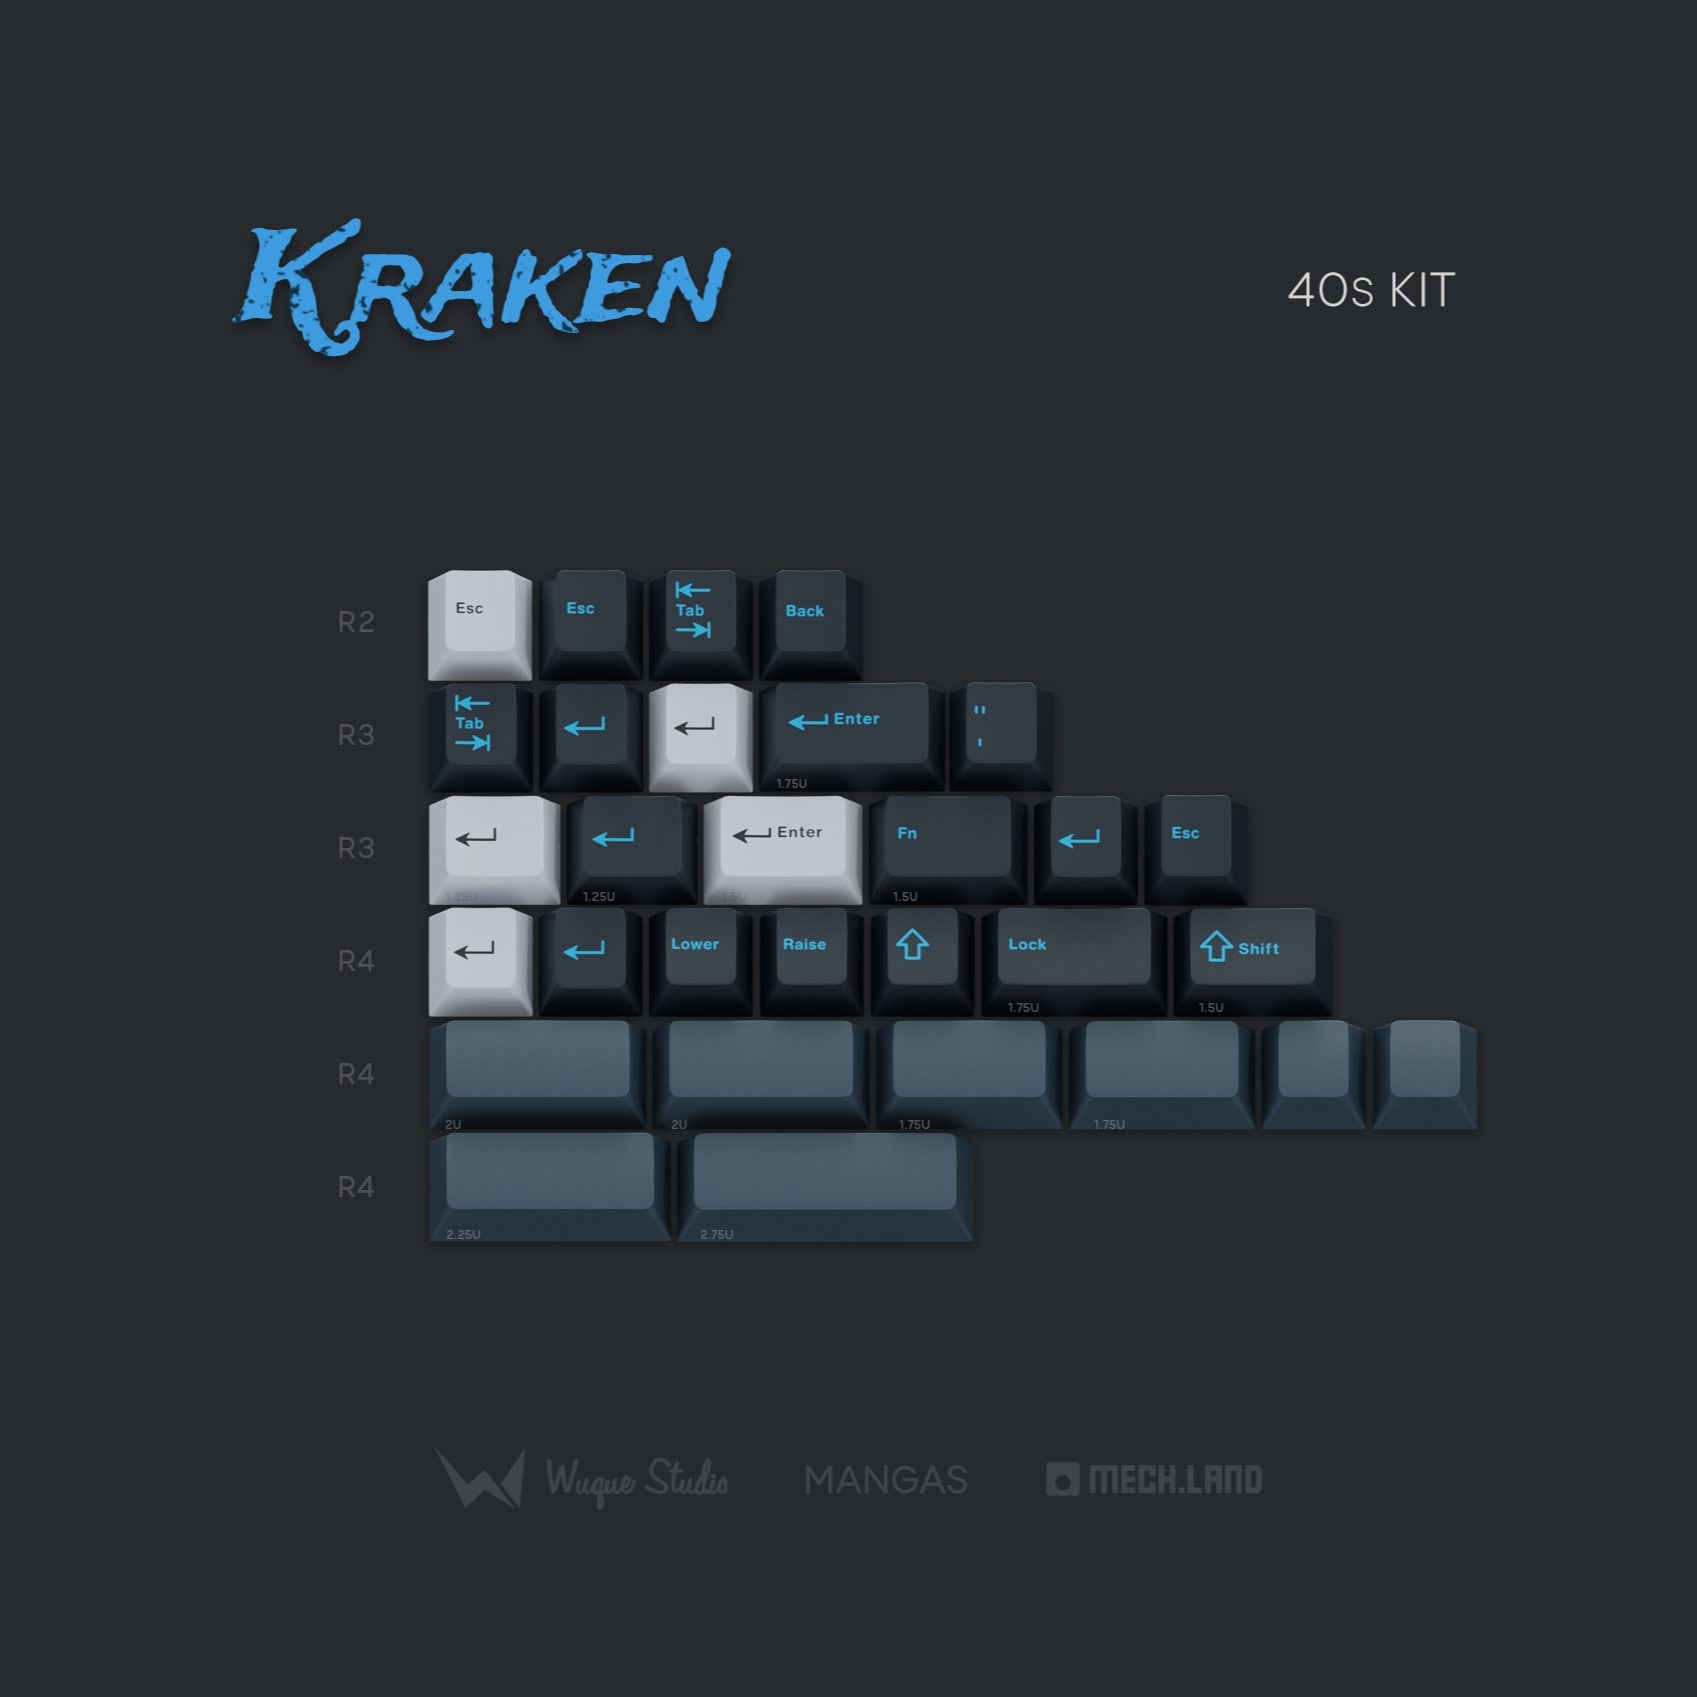 Group-Buy WS Kraken Keycaps